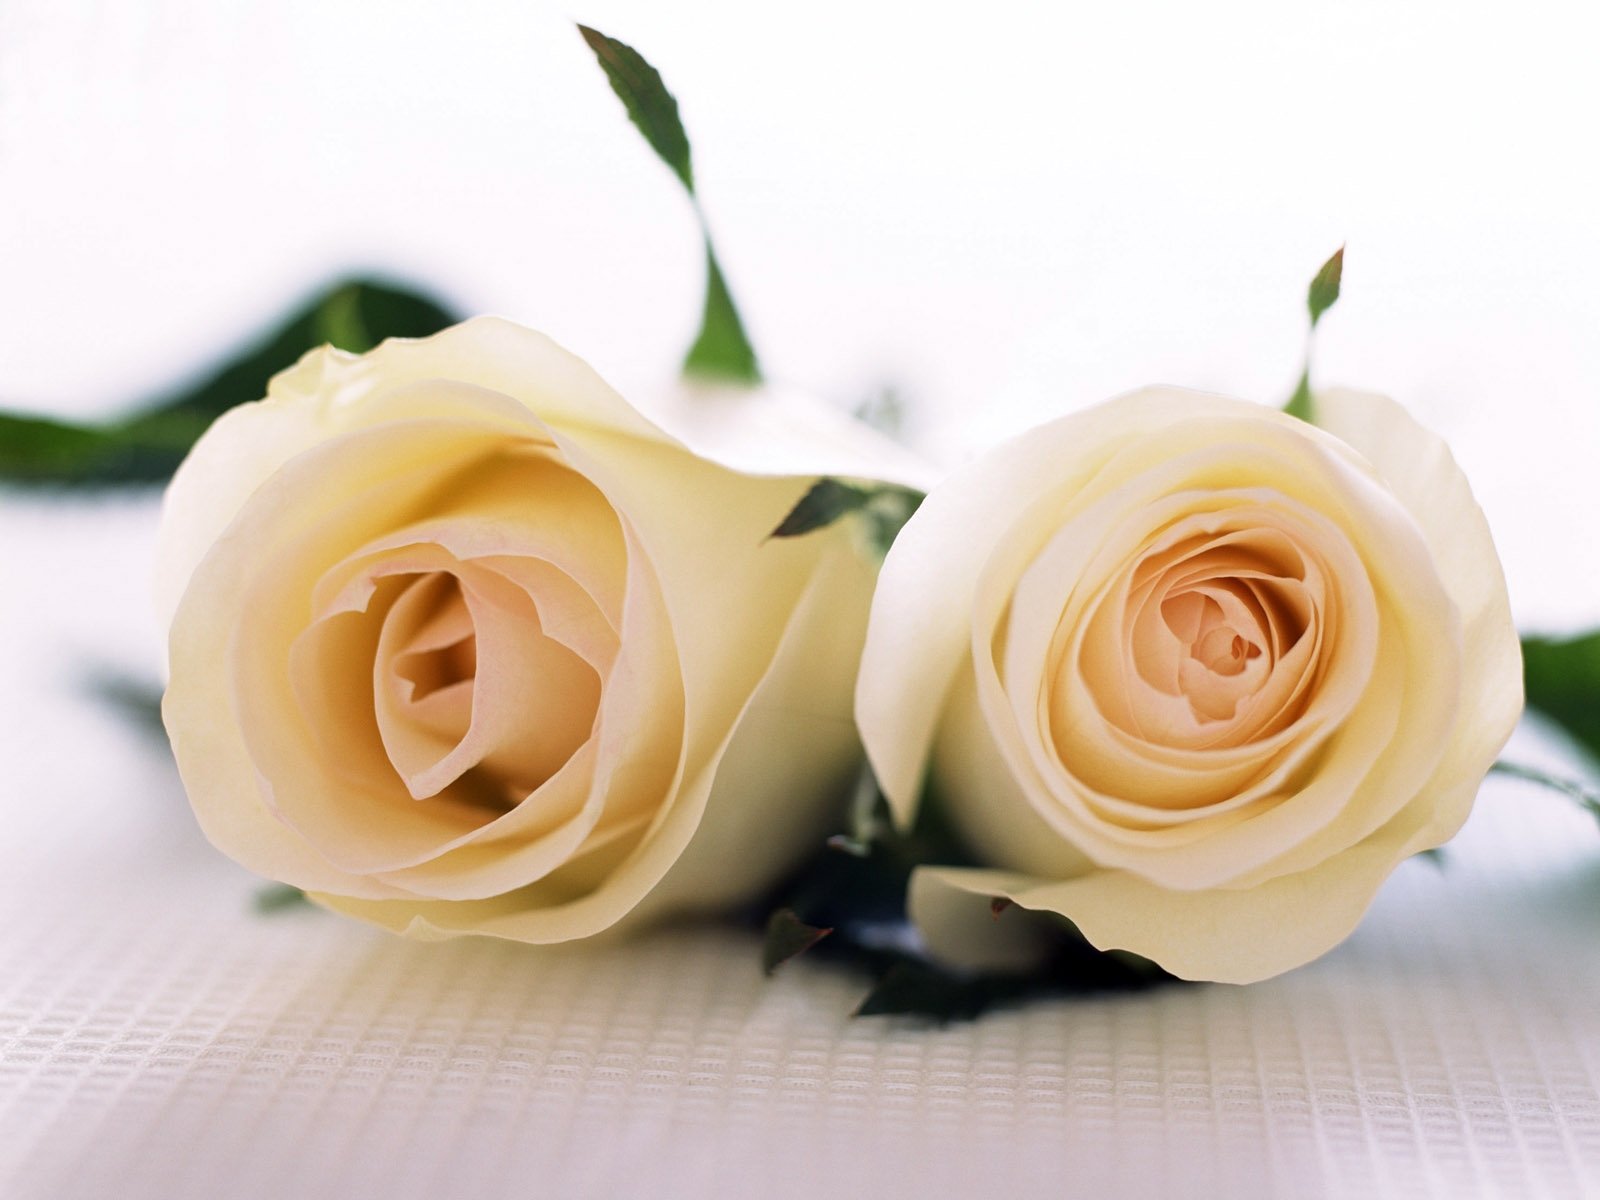 yellow-rose-couple-flower-plant-roses-petal-buds-land-plant-flowering-plant-close-up-floristry-garden-roses-rose-family-flower-bouquet-flower-arranging-floral-design-cut-flowers-707182.jpg